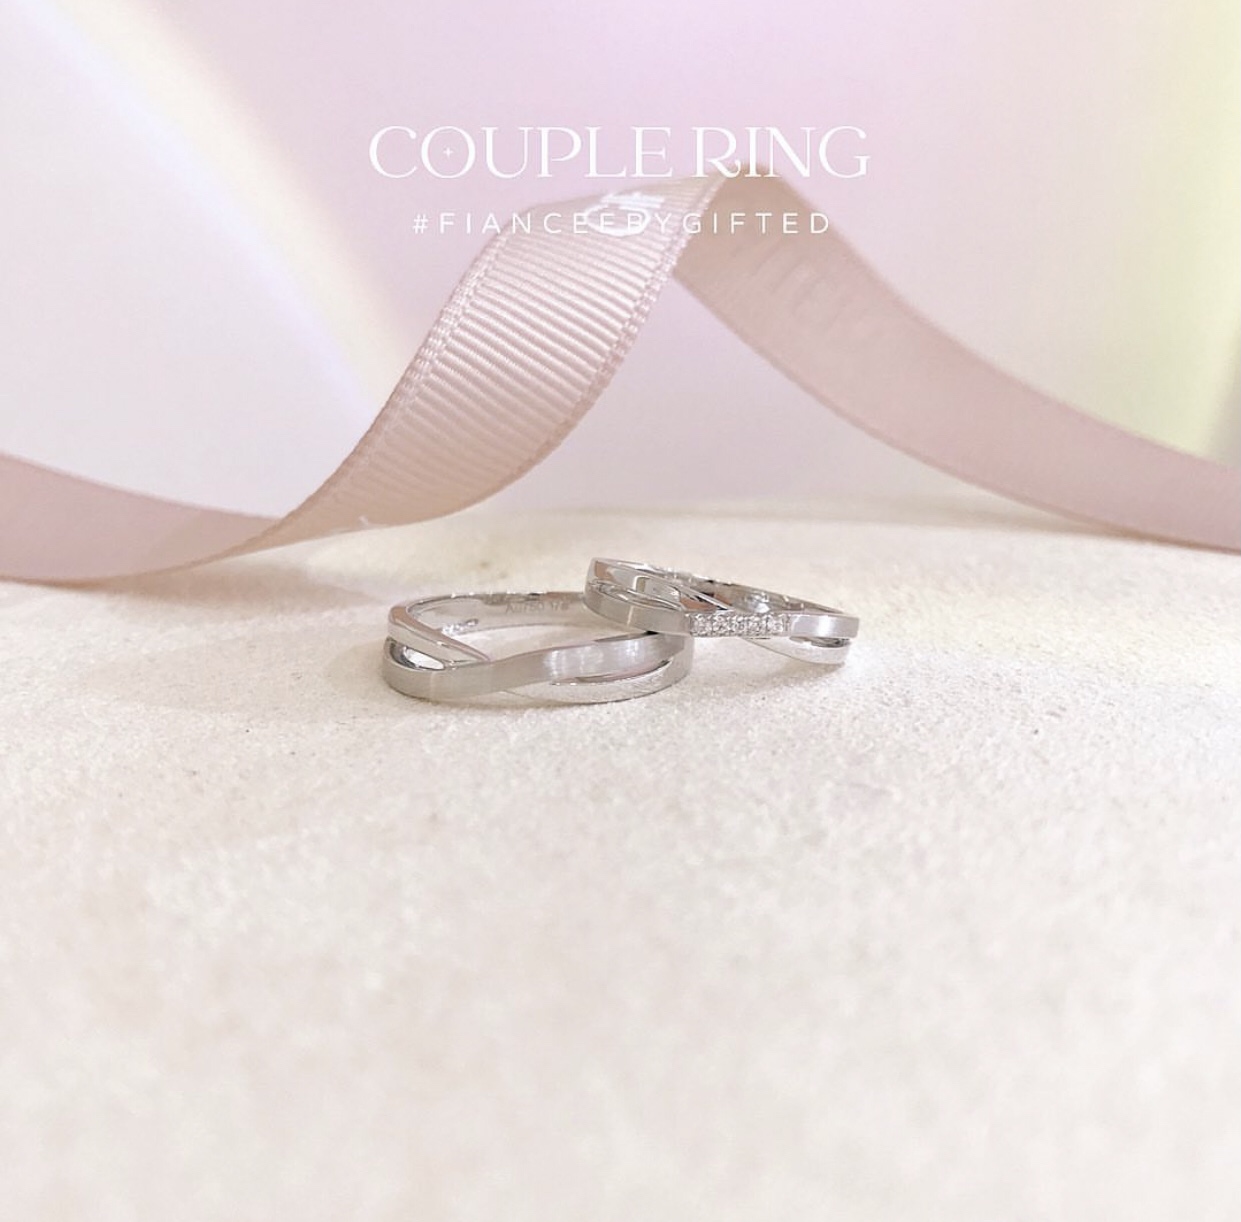 FIANCÉE-Between Couple Ring